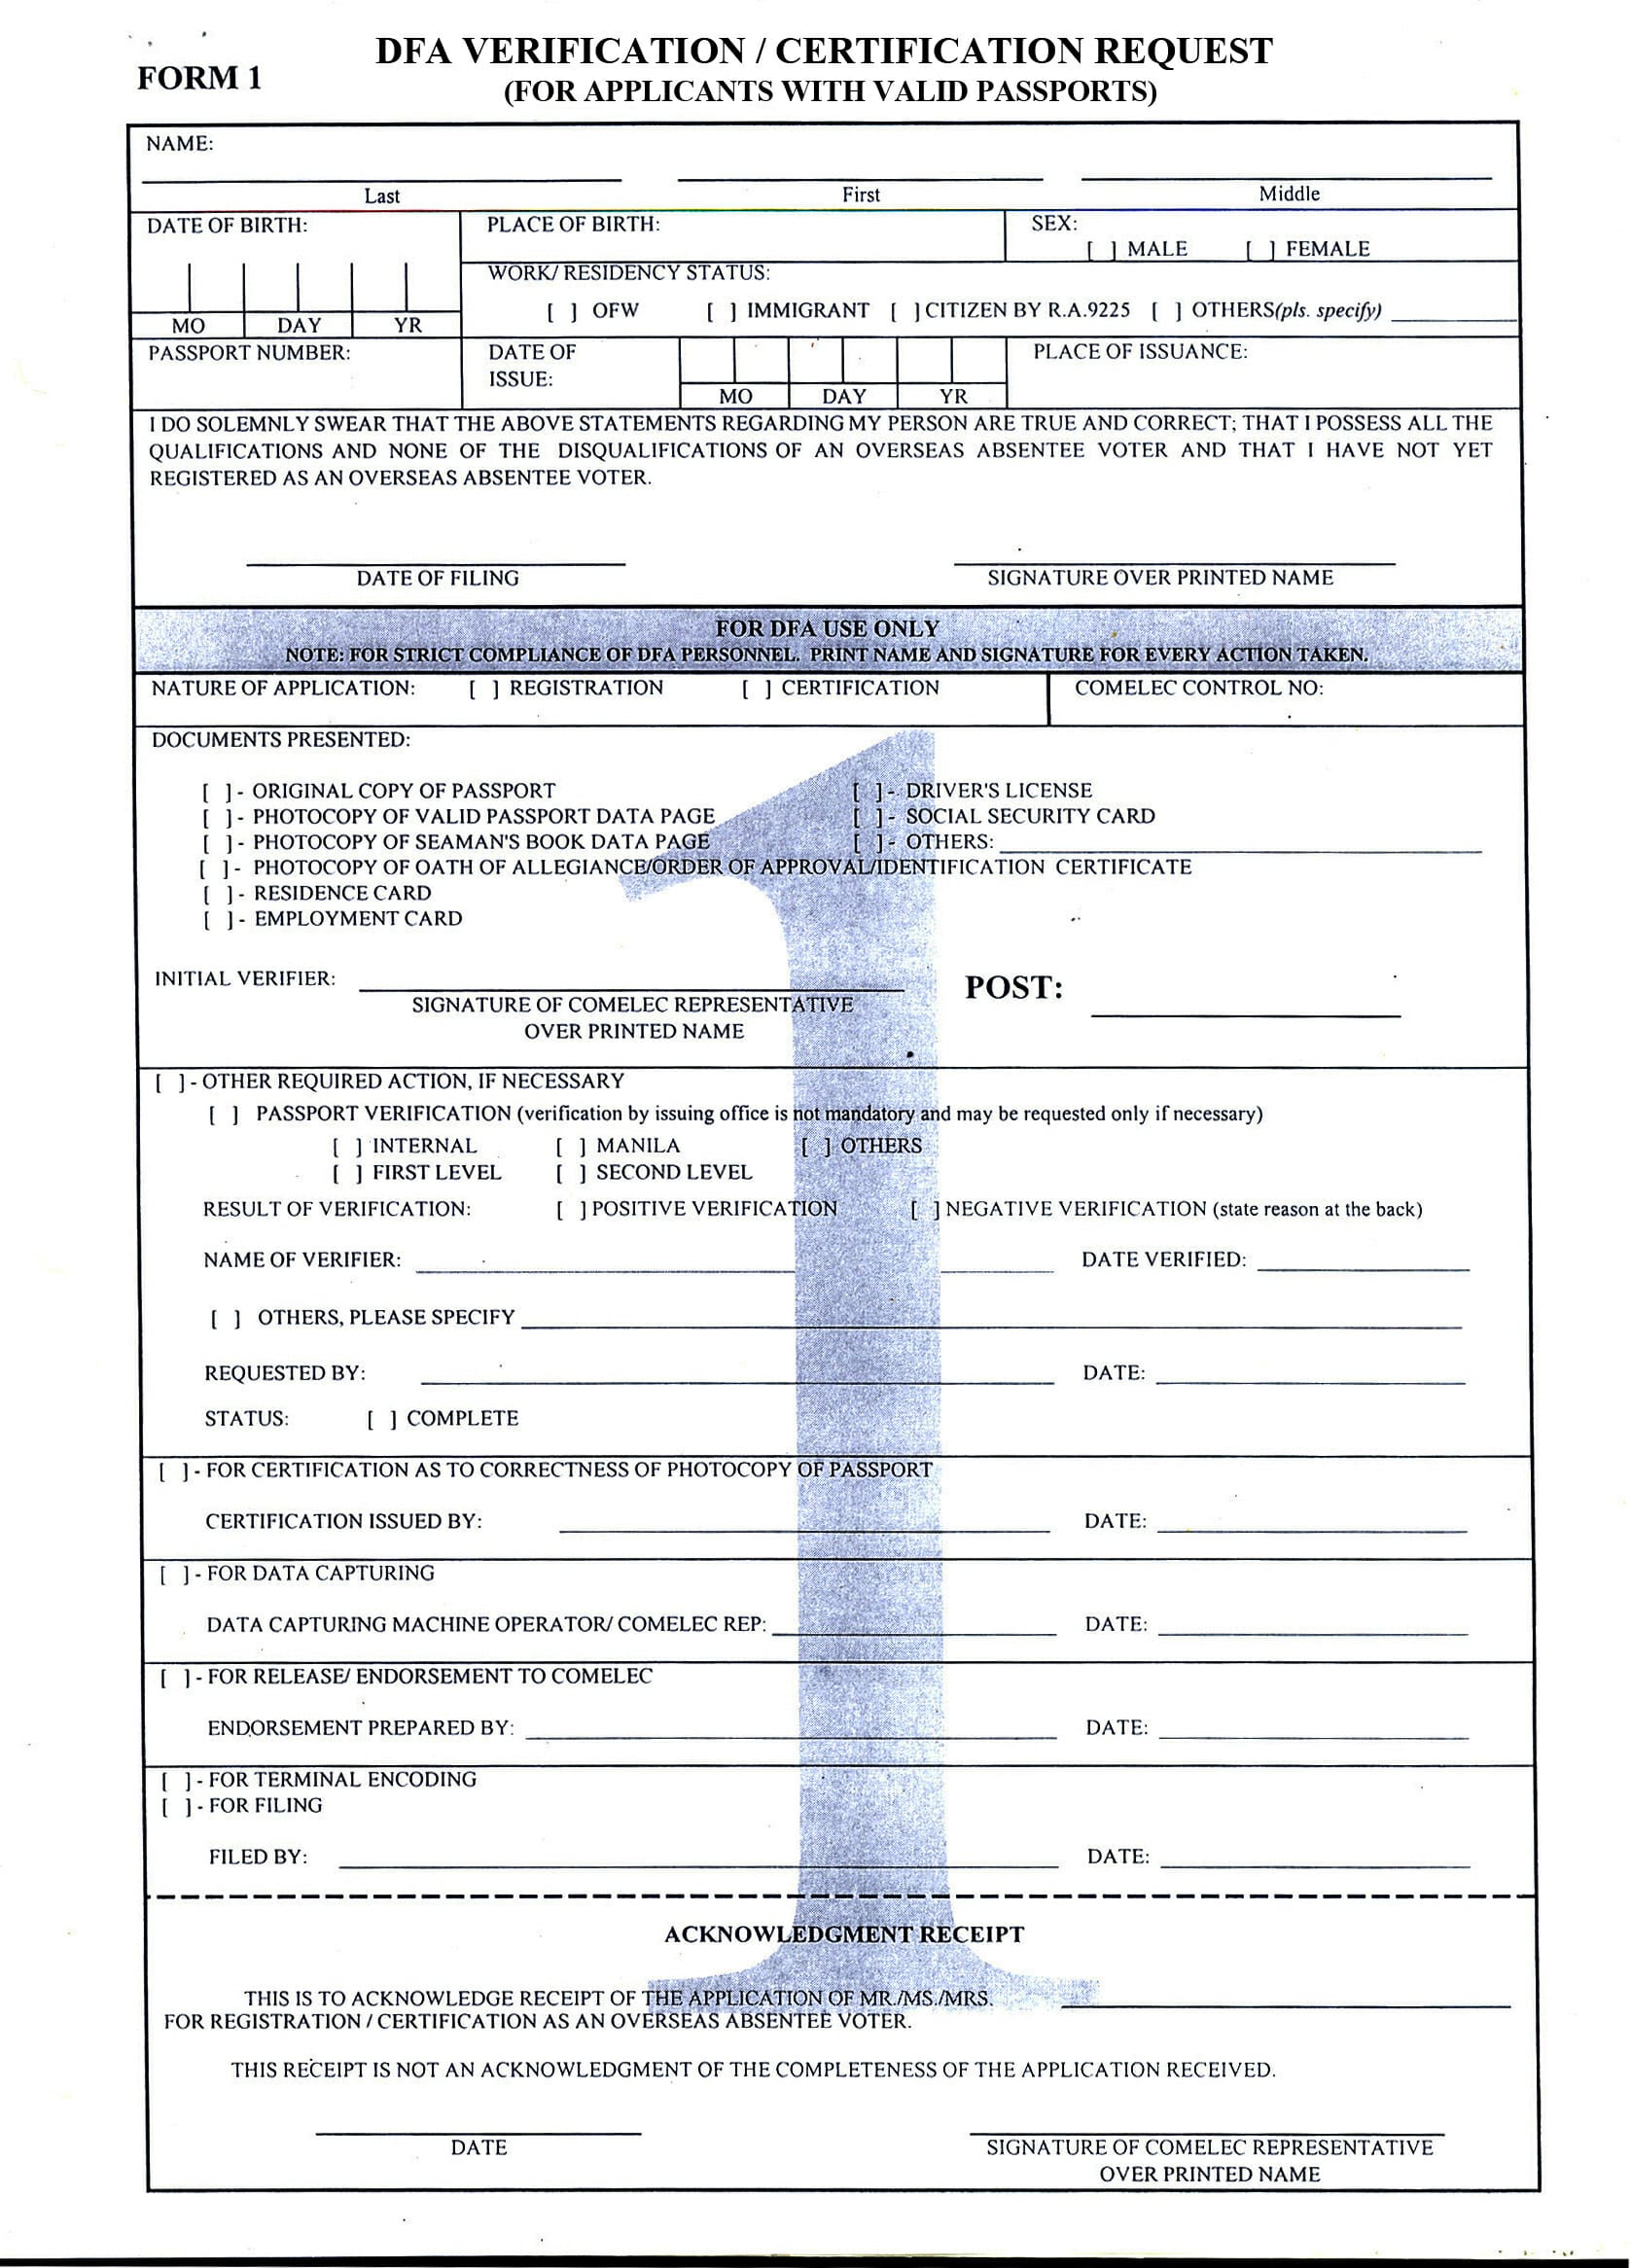 dfa verification certificate request form 1